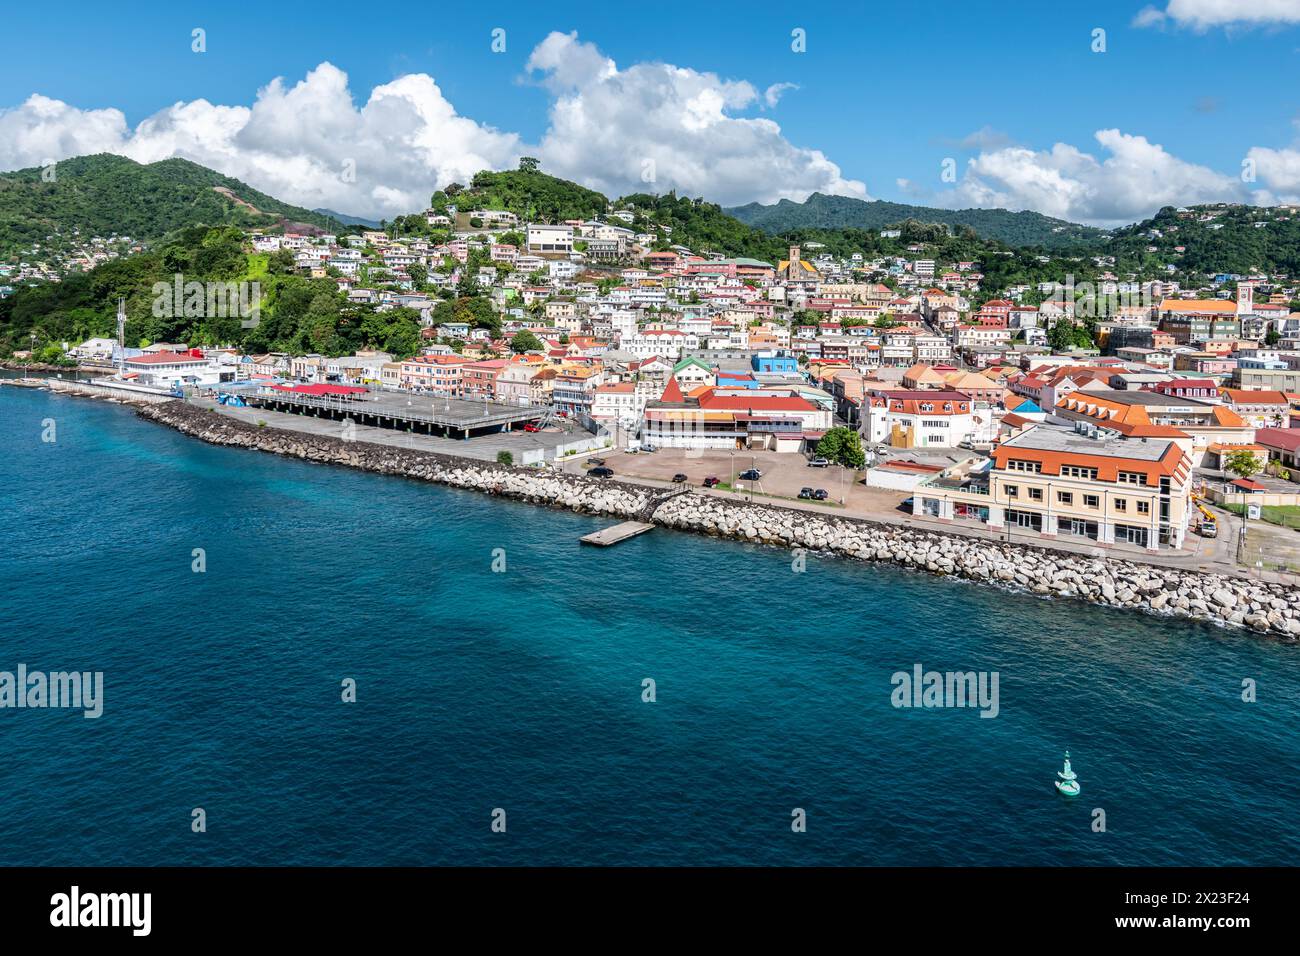 St George's Grenada harbor and cityscape. Stock Photo